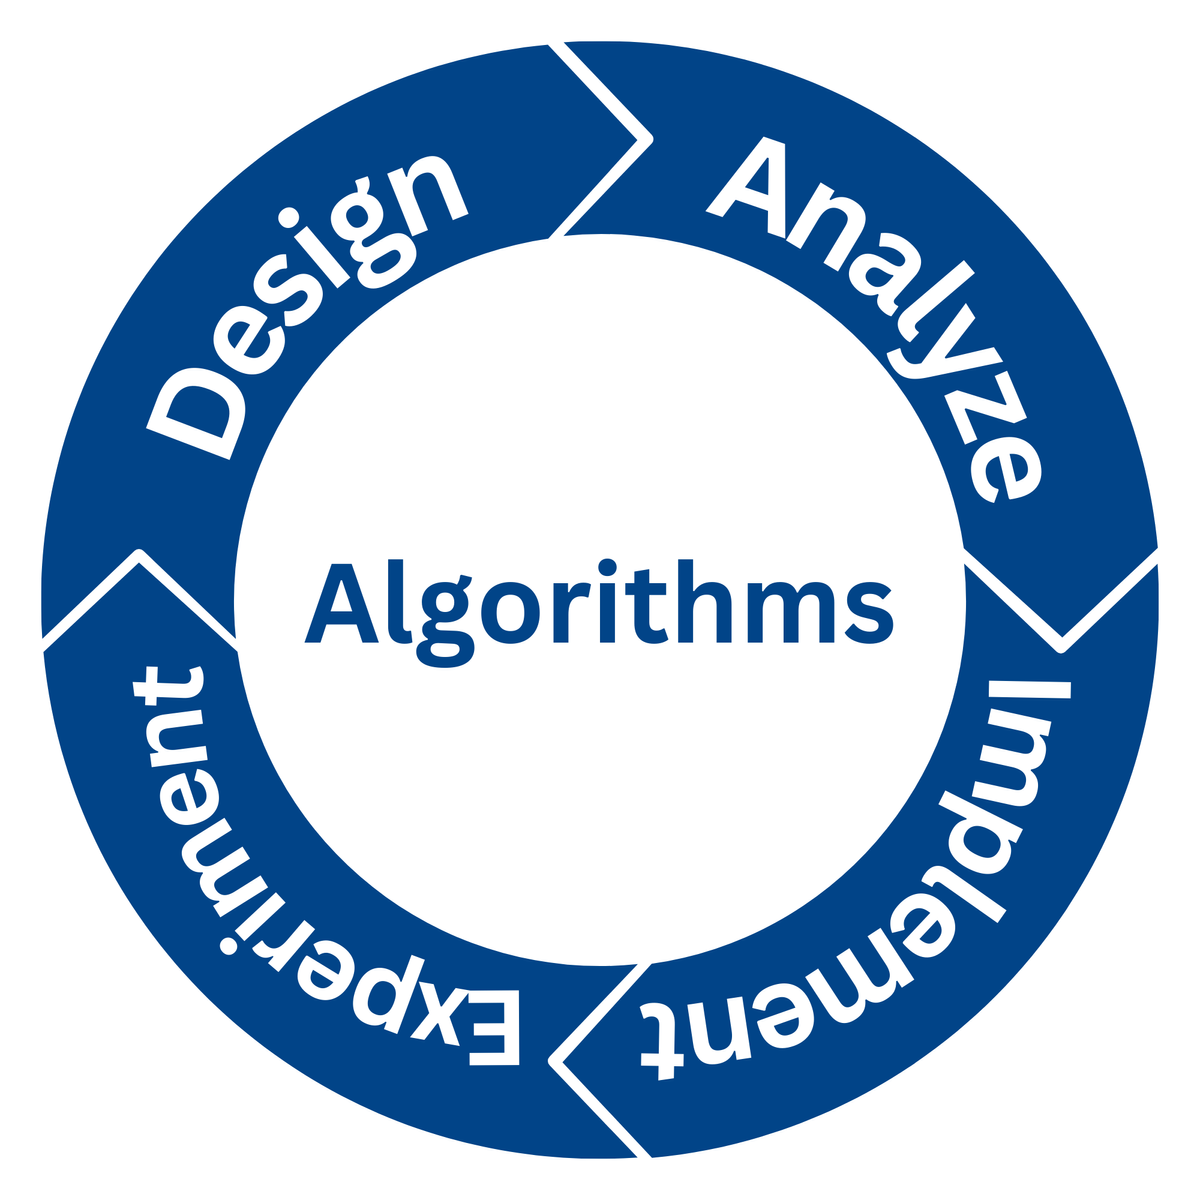 Design Algorithm And Analysis 